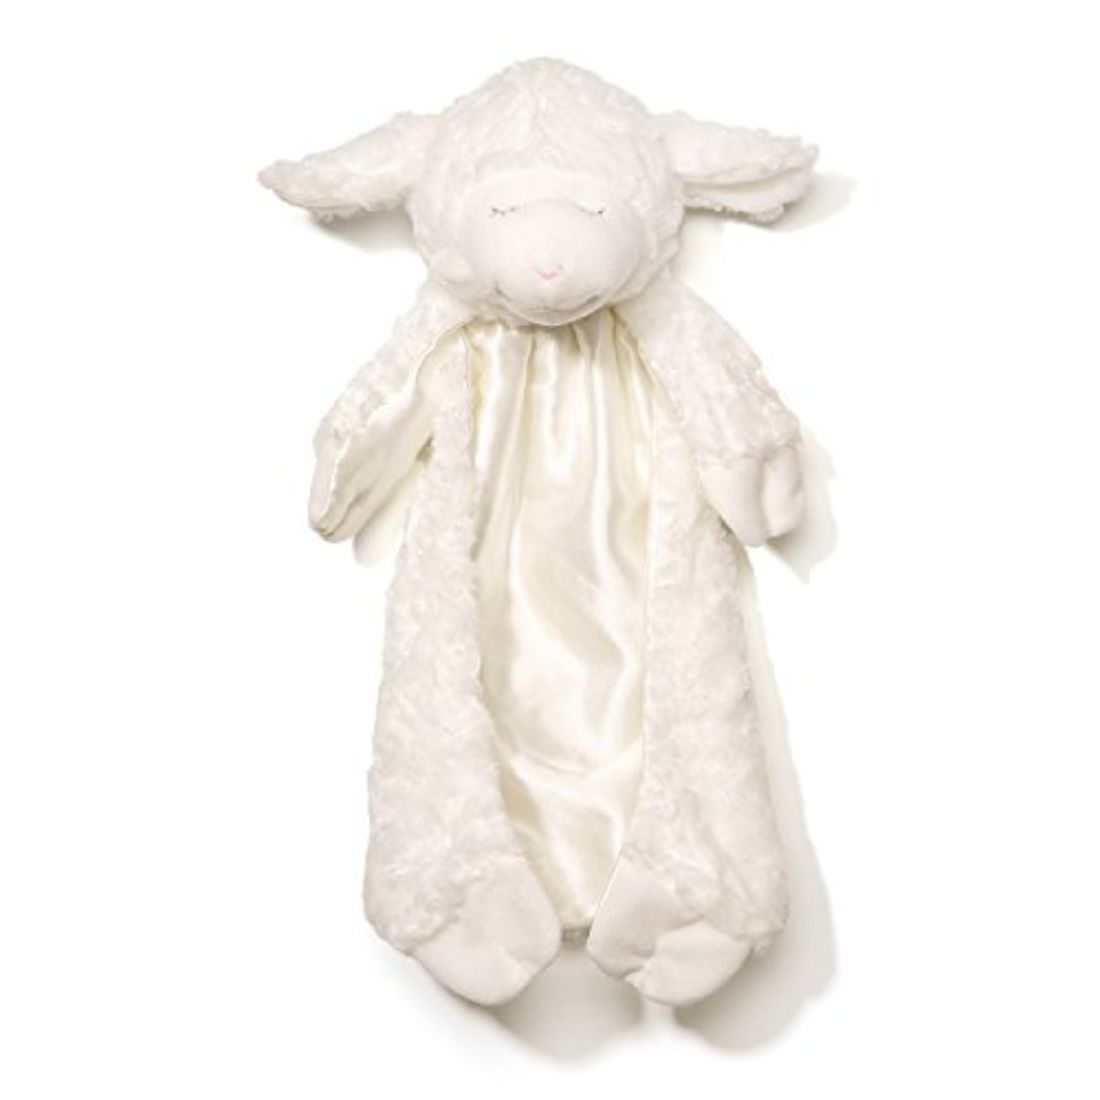 Buy GUND Baby Gund Winky Lamb Huggybuddy Stuffed Animal Plush Blanket